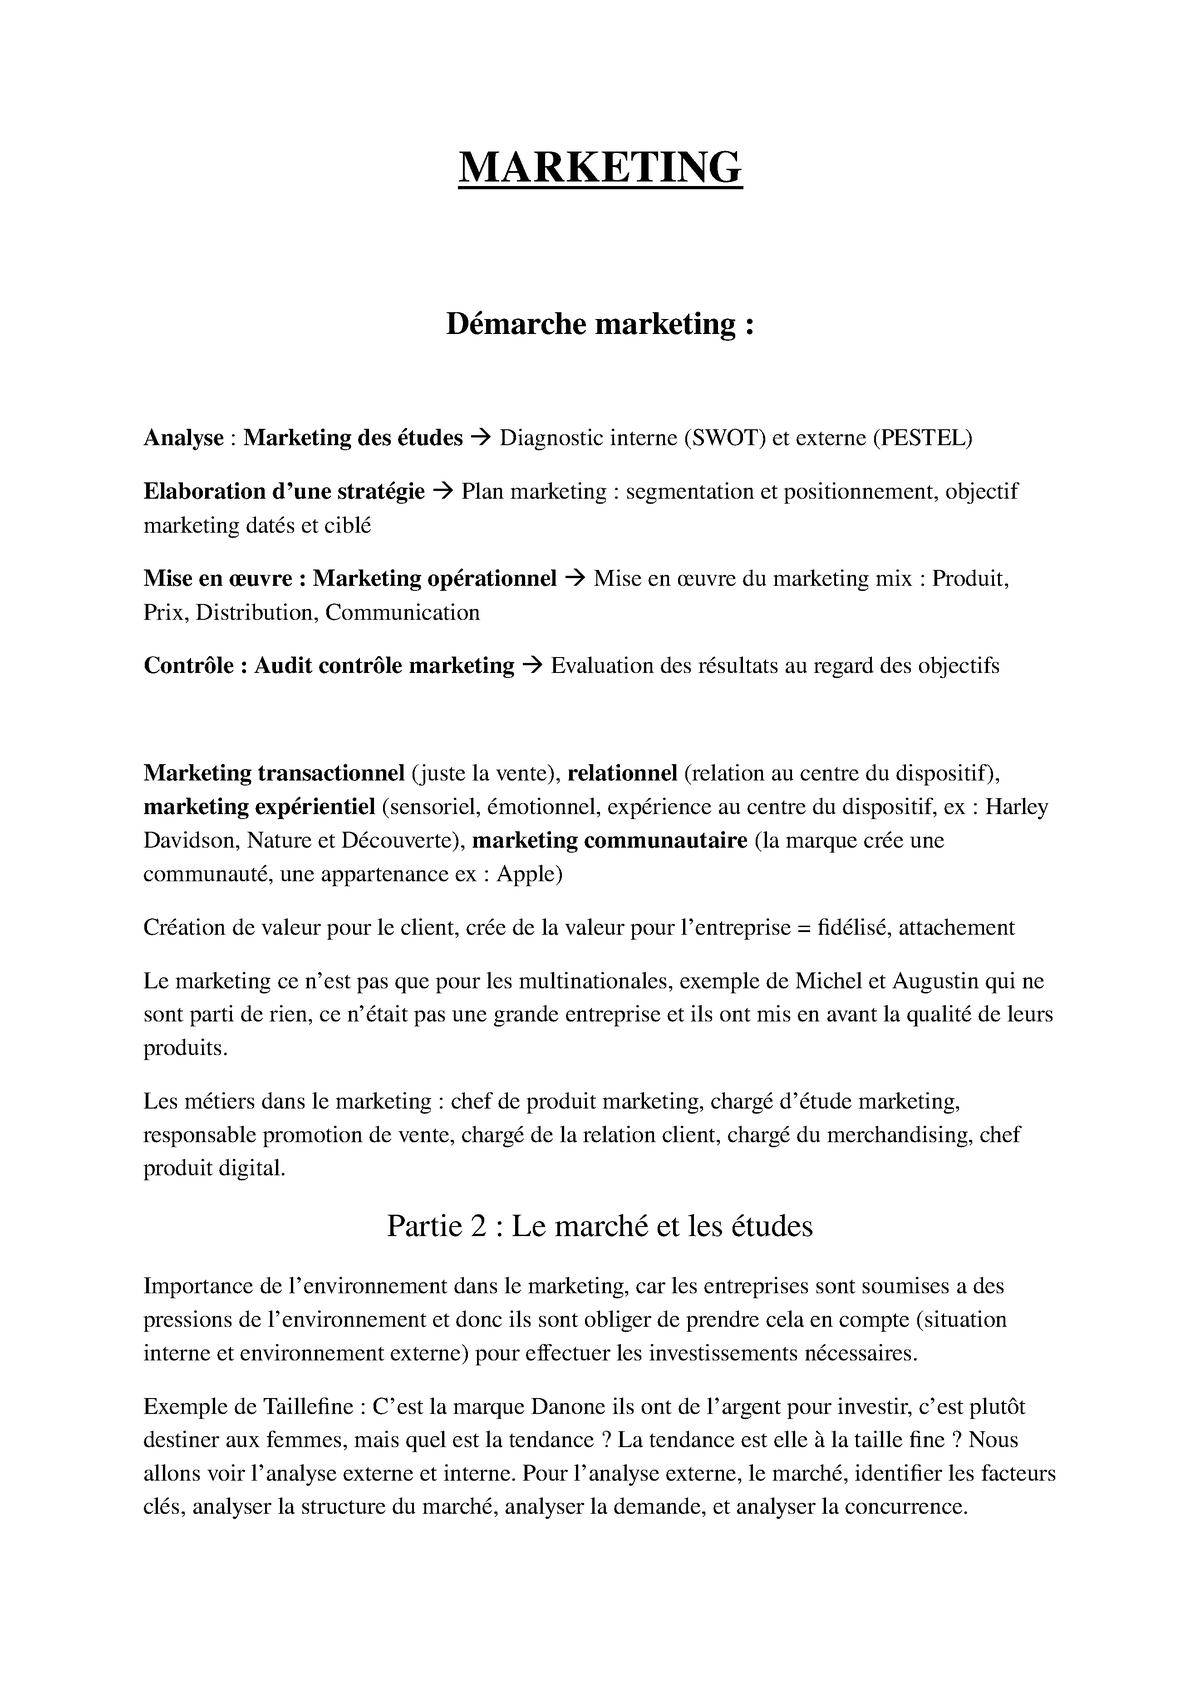 dissertation marketing industriel